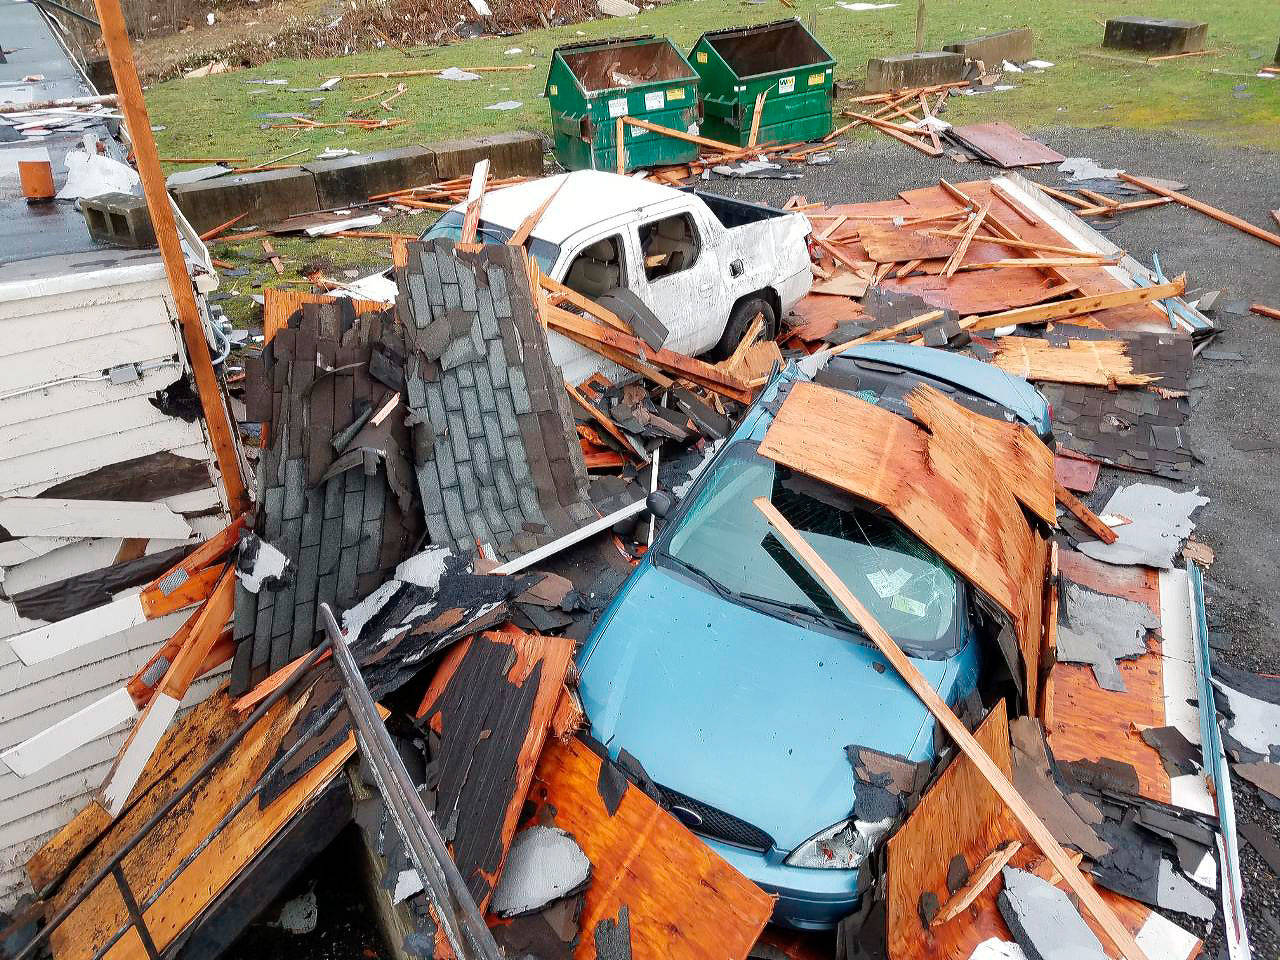 Adding insult to injury, Shari Patrick’s SUV was totaled by resulting tornado damage. (Shari Patrick photo)